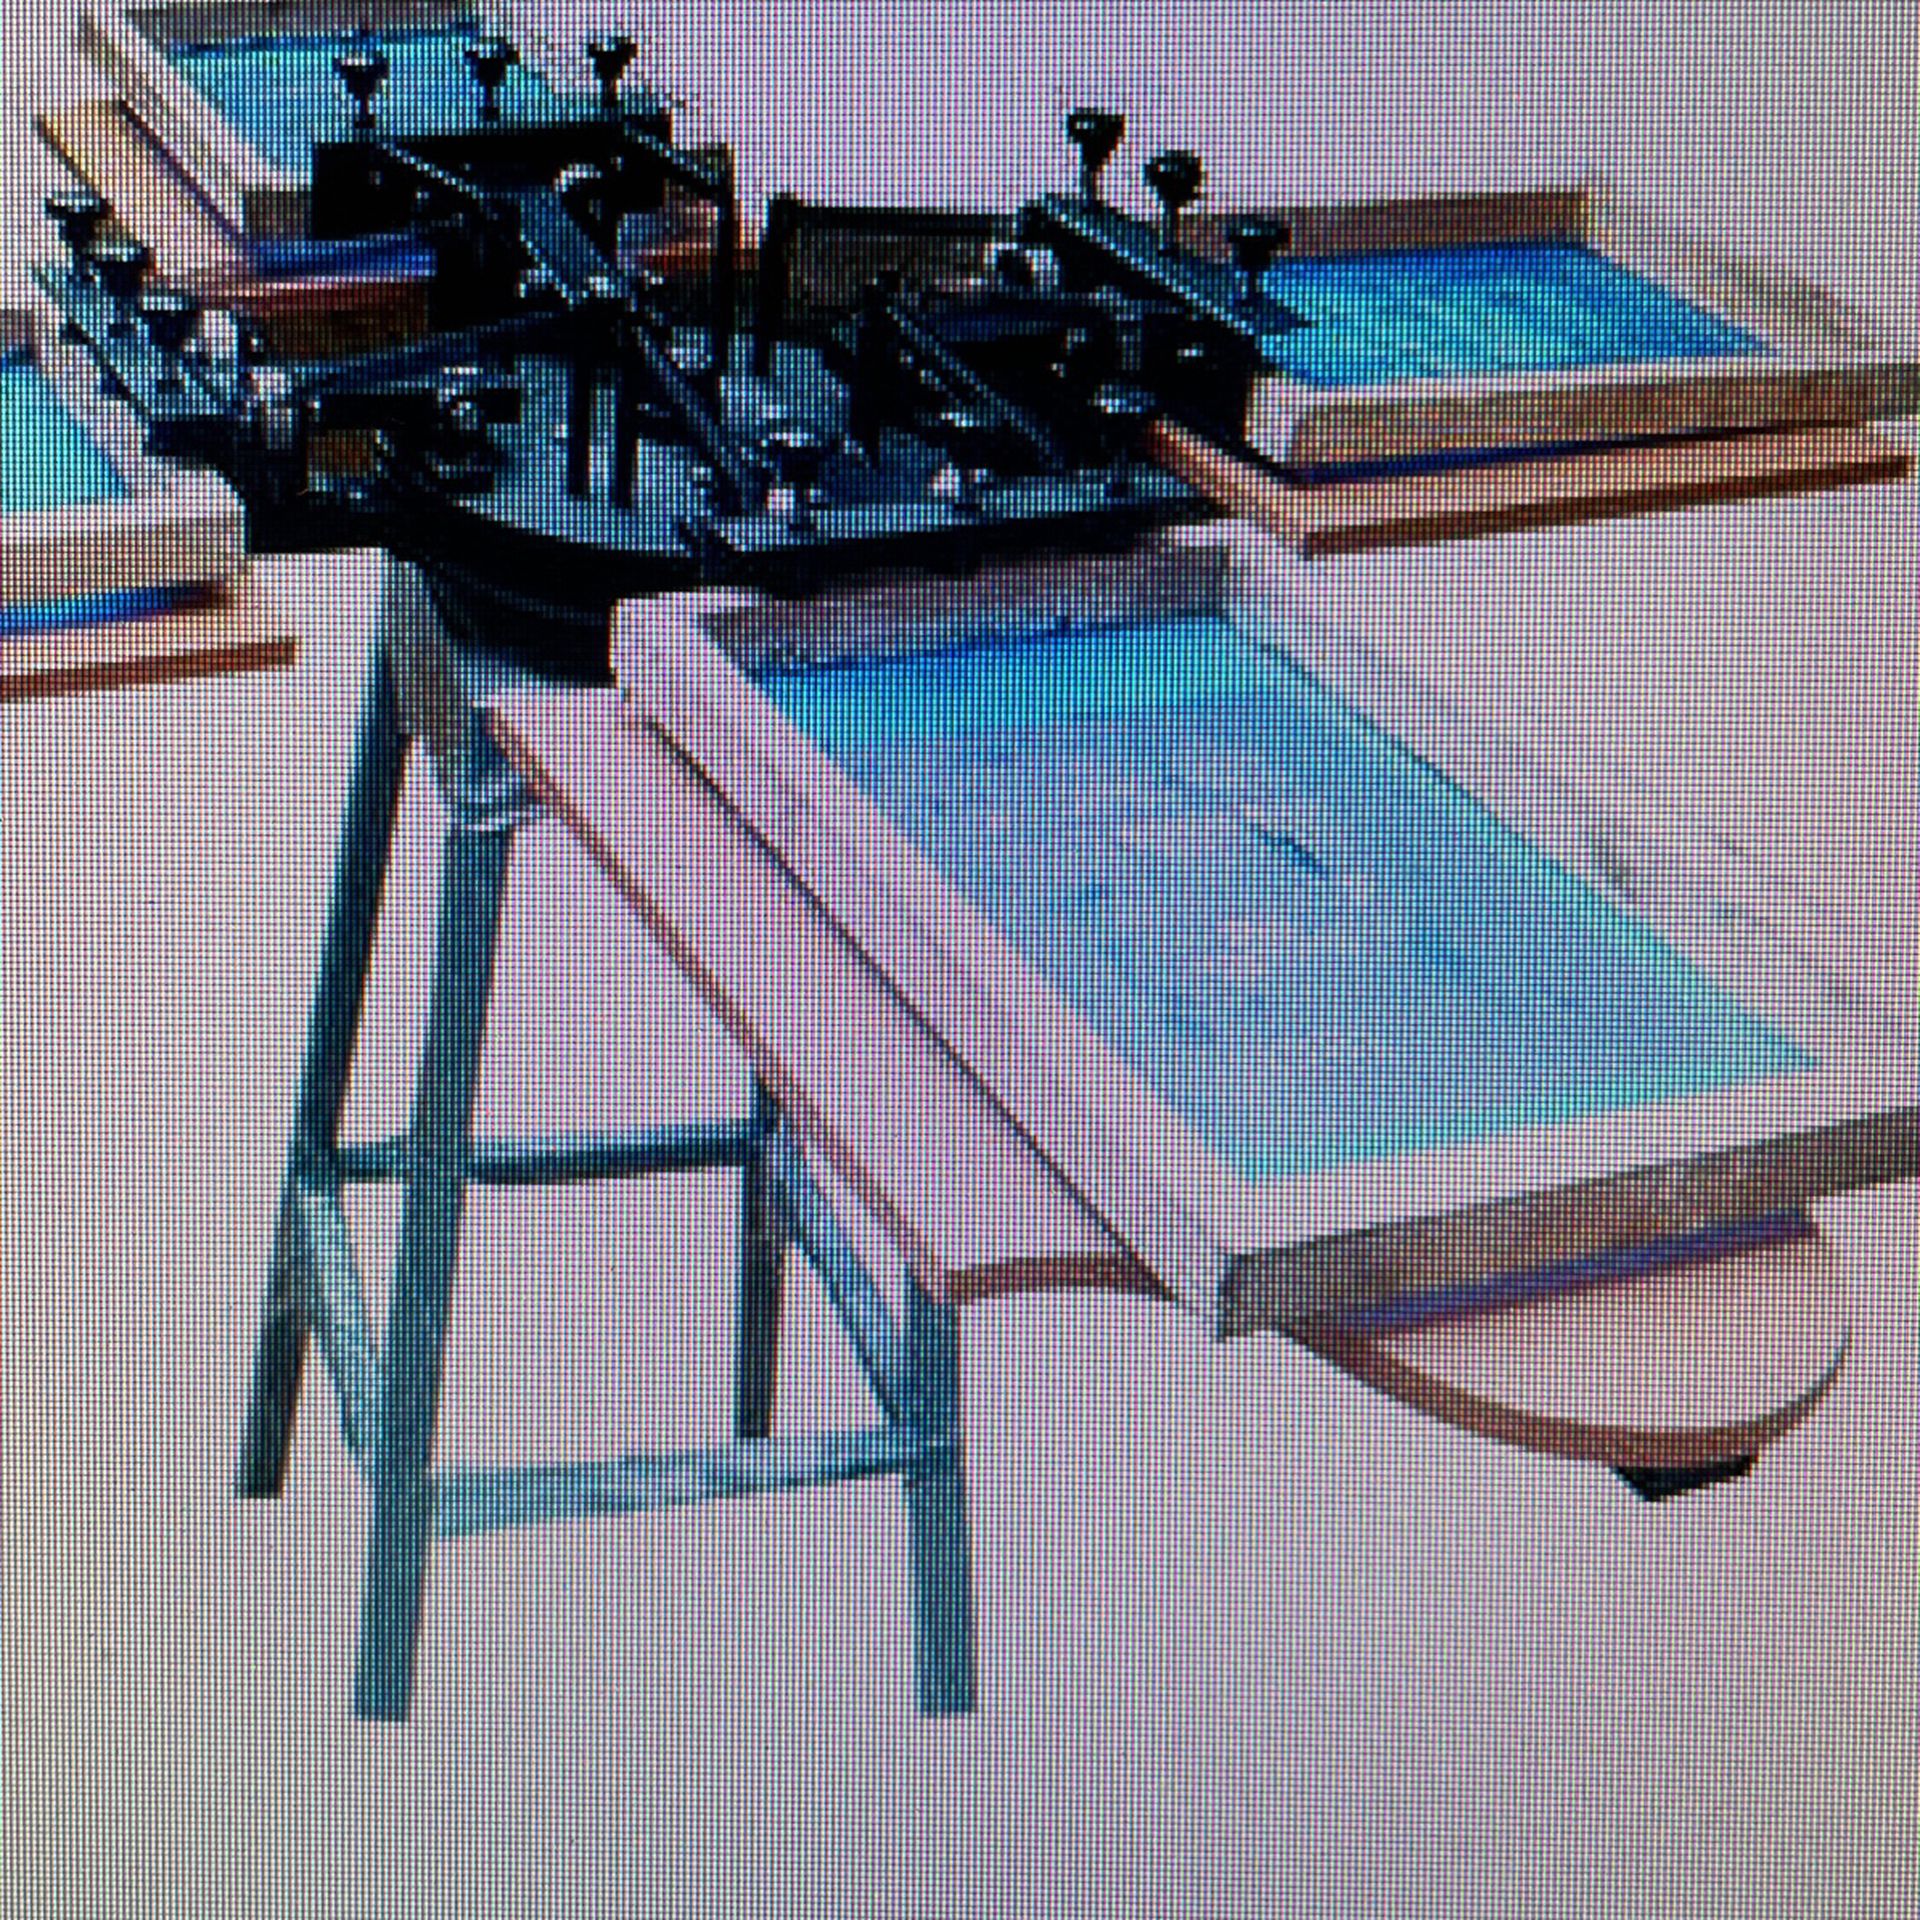 Screen Printing Equipment 